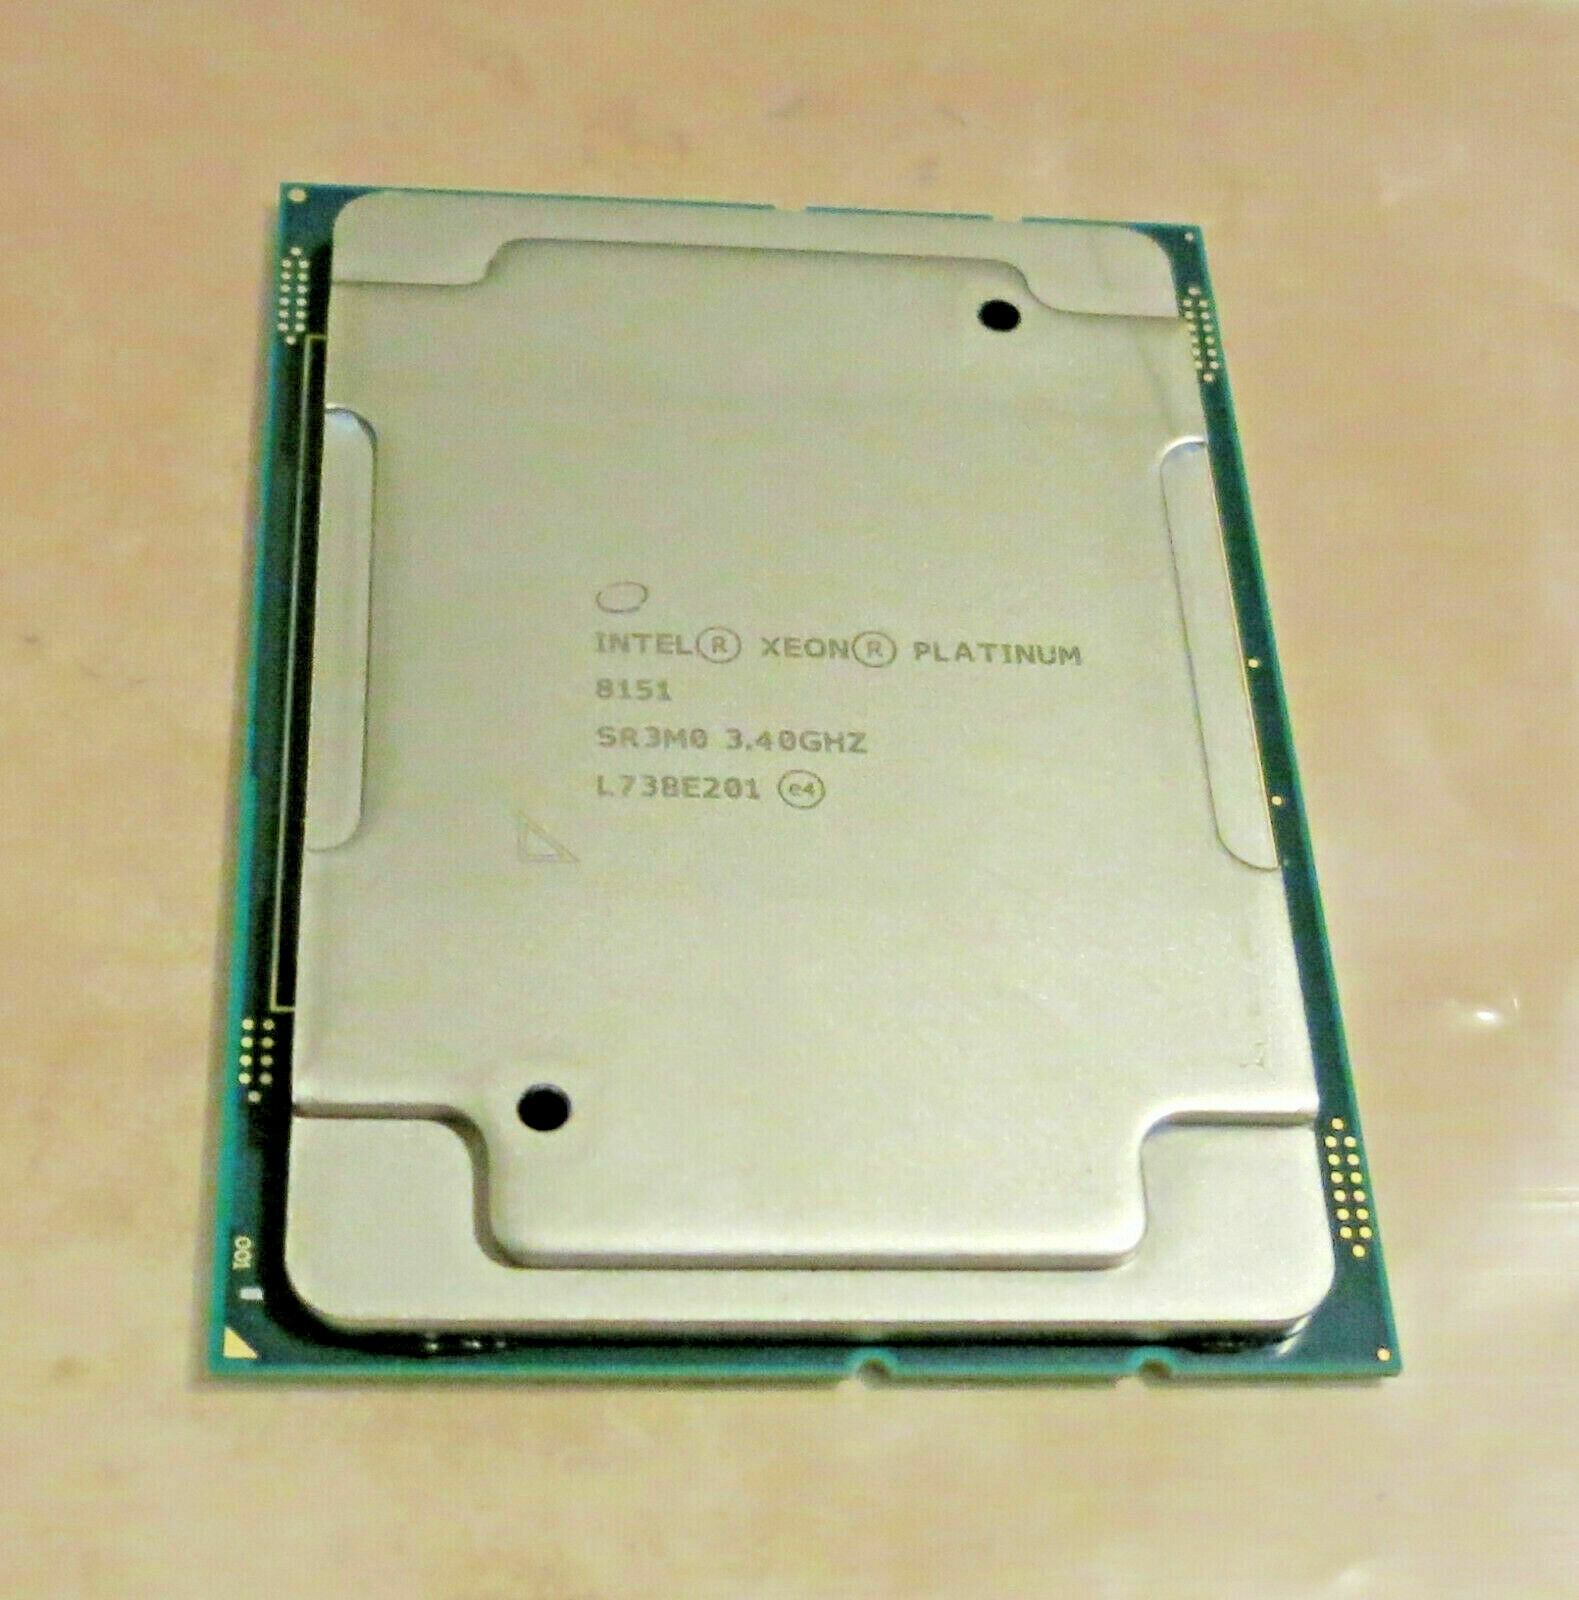 Intel Xeon Platinum 8151 CPU Processor 12 Core 3.4GHz L3 Cache 240W SR3M0